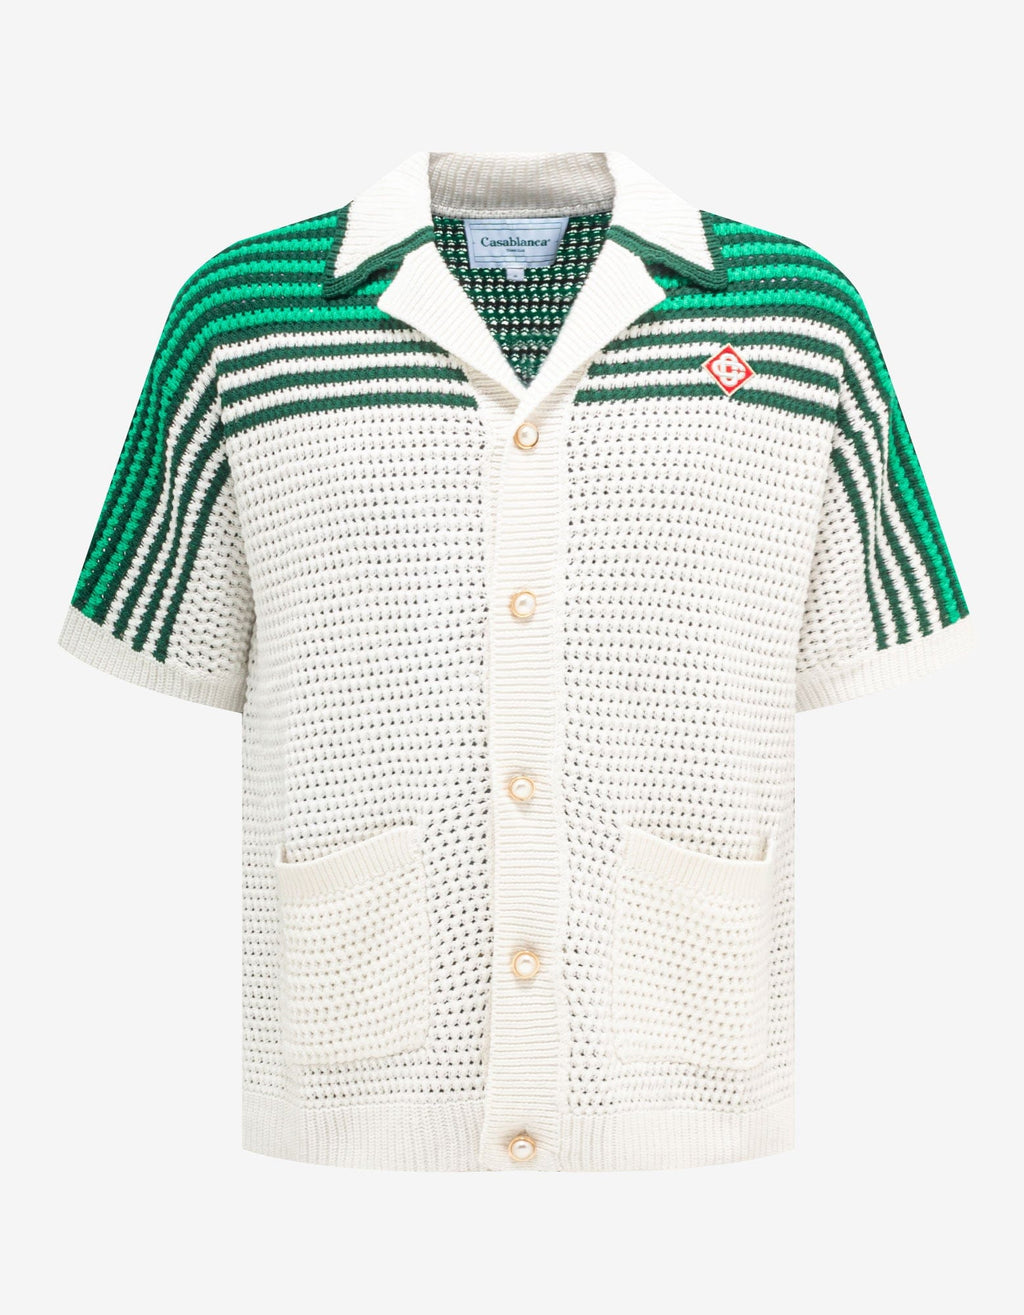 Casablanca Casablanca White & Green Tennis Crochet Shirt